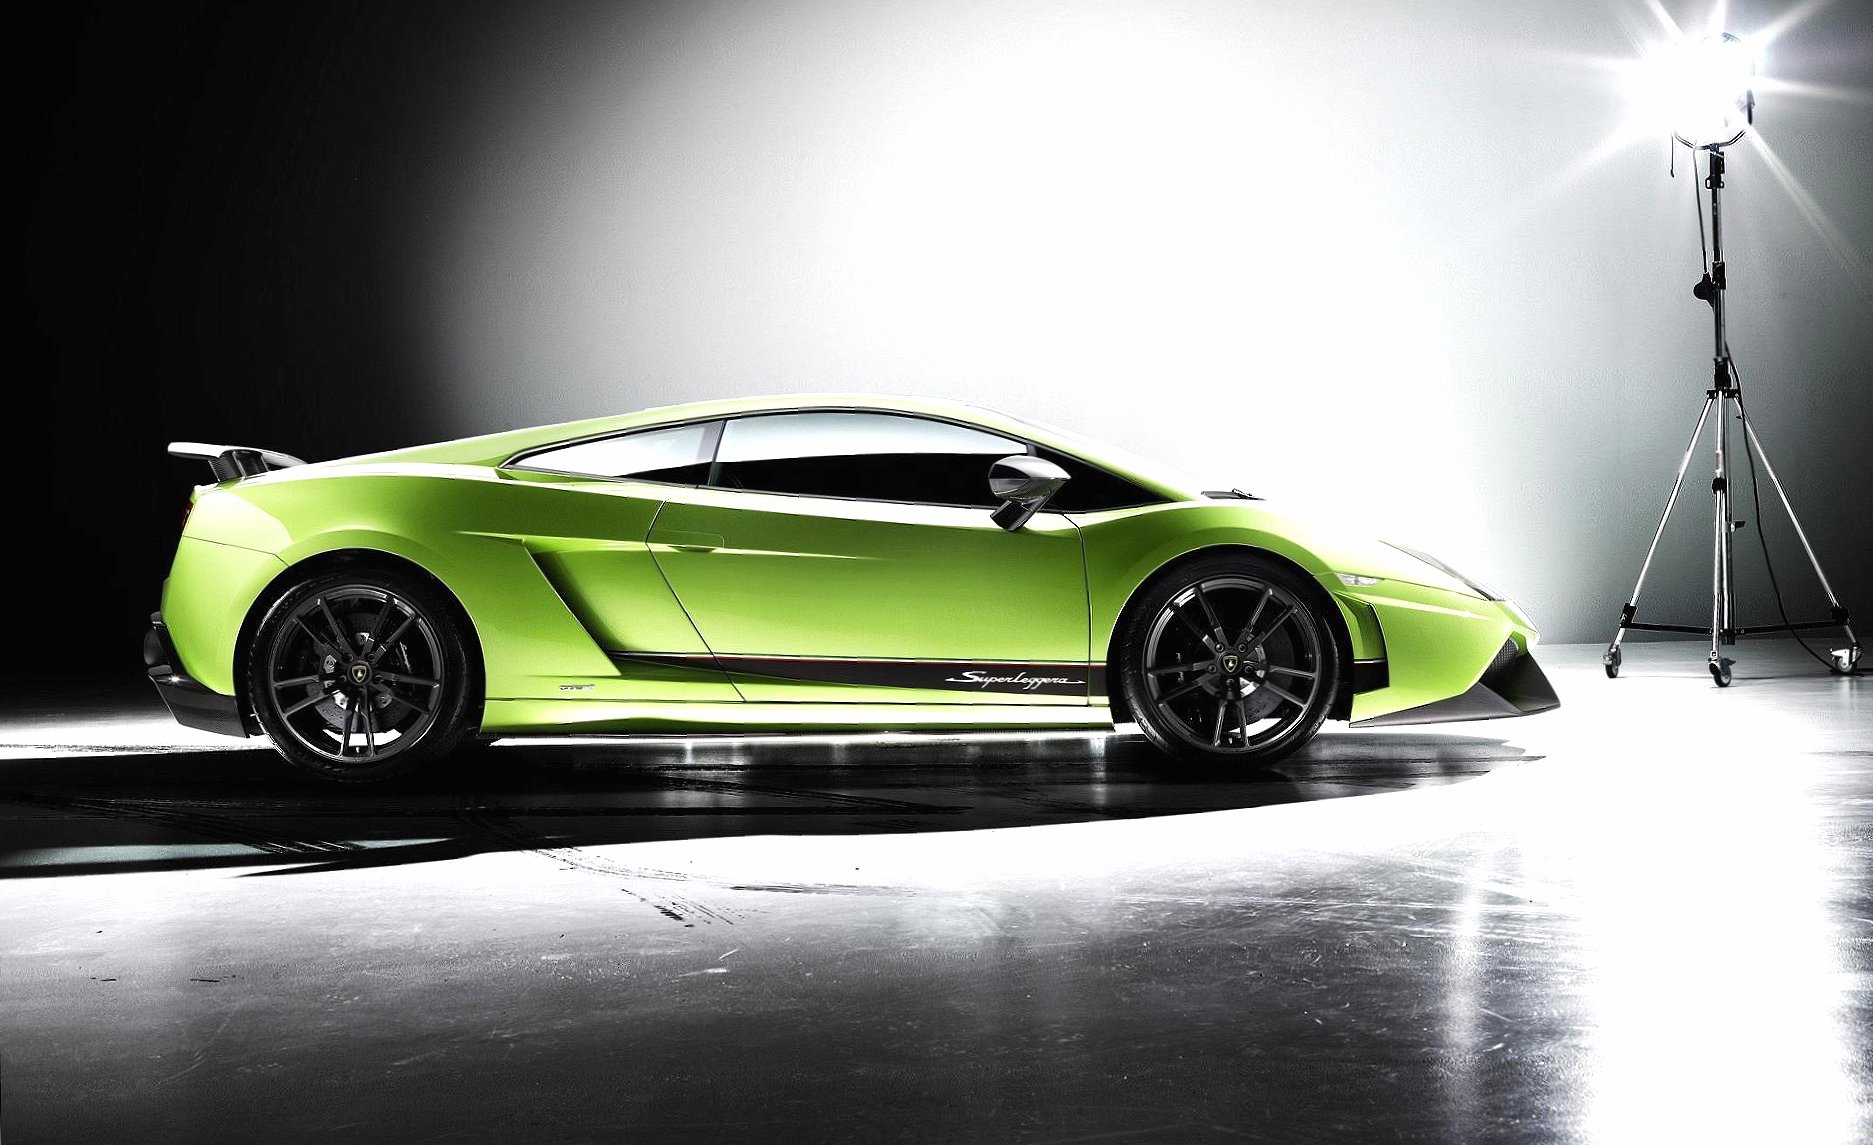 Lamborghini gallardo lp 570 4 superleggera at 640 x 960 iPhone 4 size wallpapers HD quality